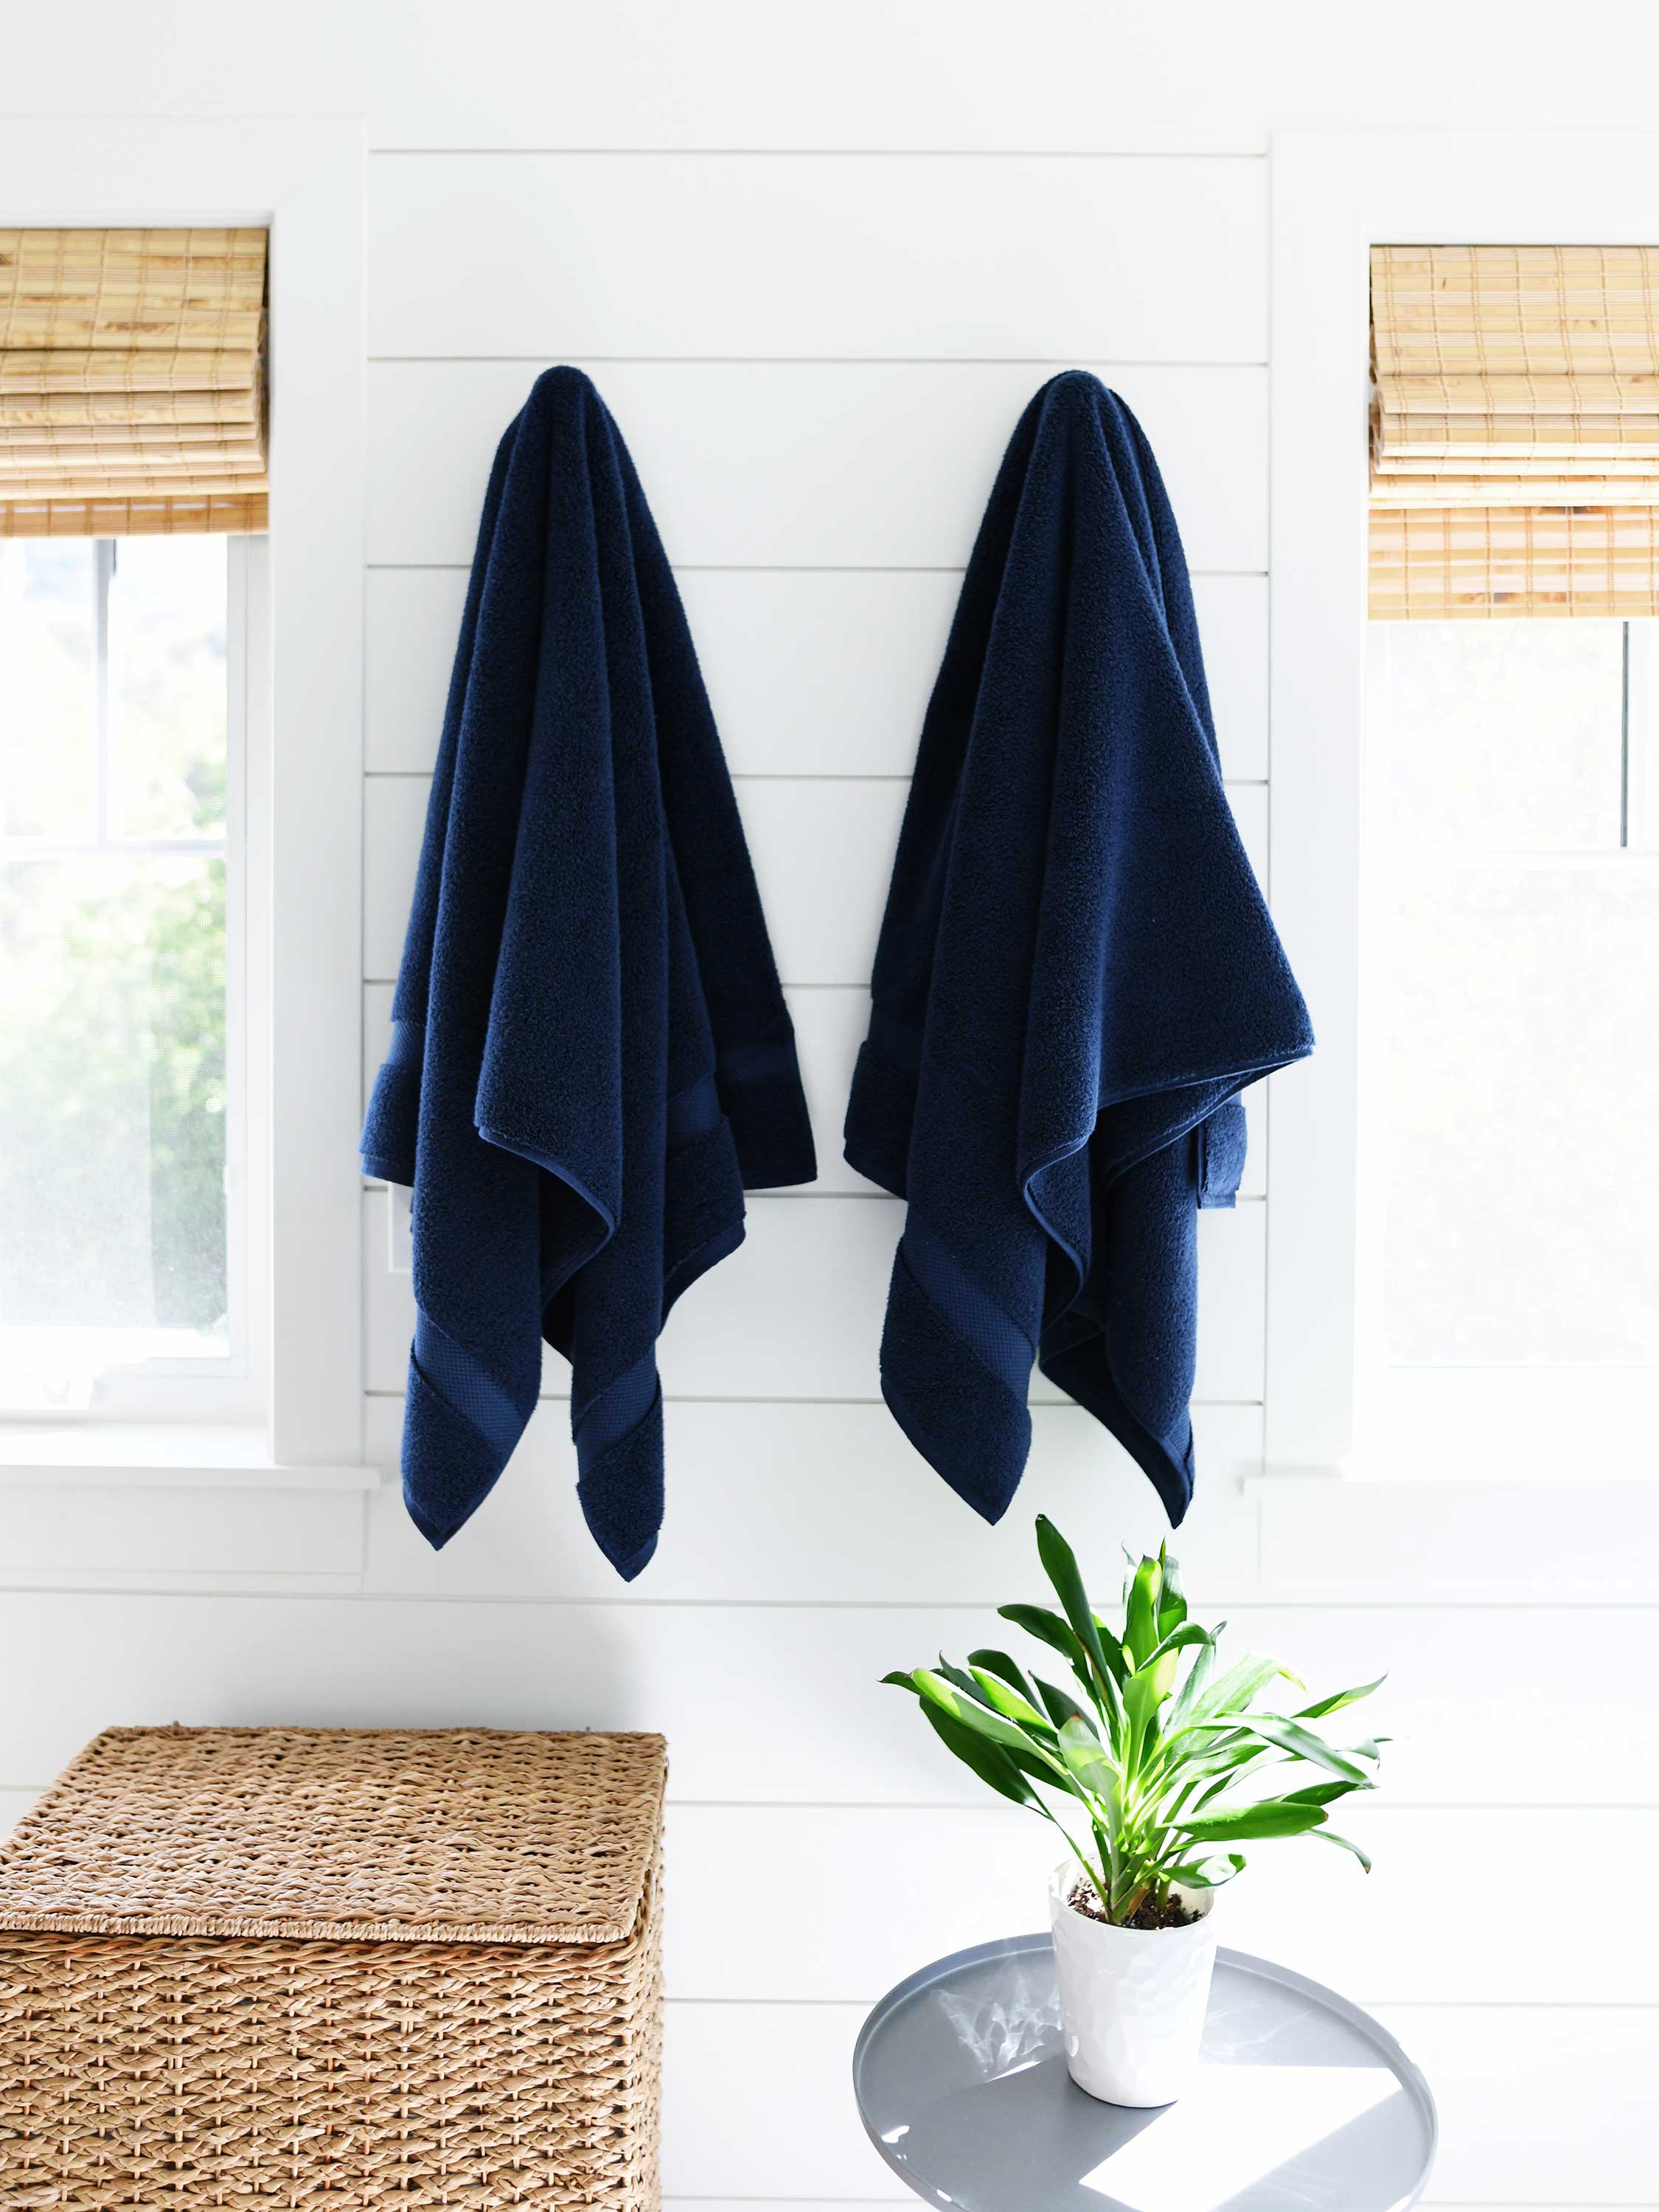 Laguna Beach Textile Company Supima Cotton Bath Towel Set - Sand - Brown